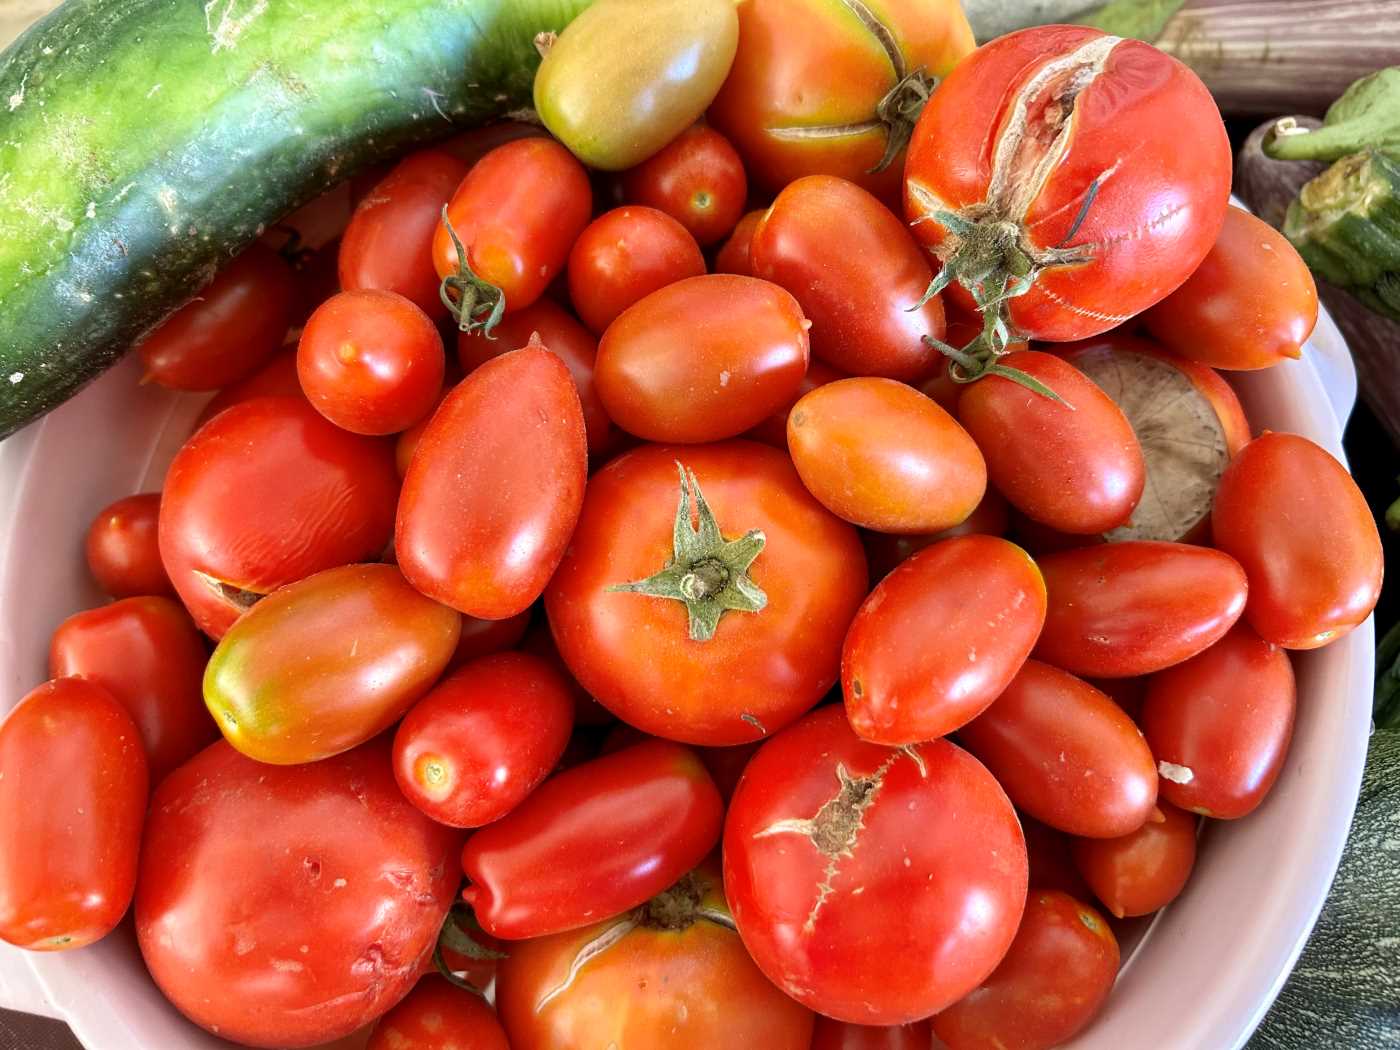 Organic Tomatoes, Cherry Tomatoes and Cucumber